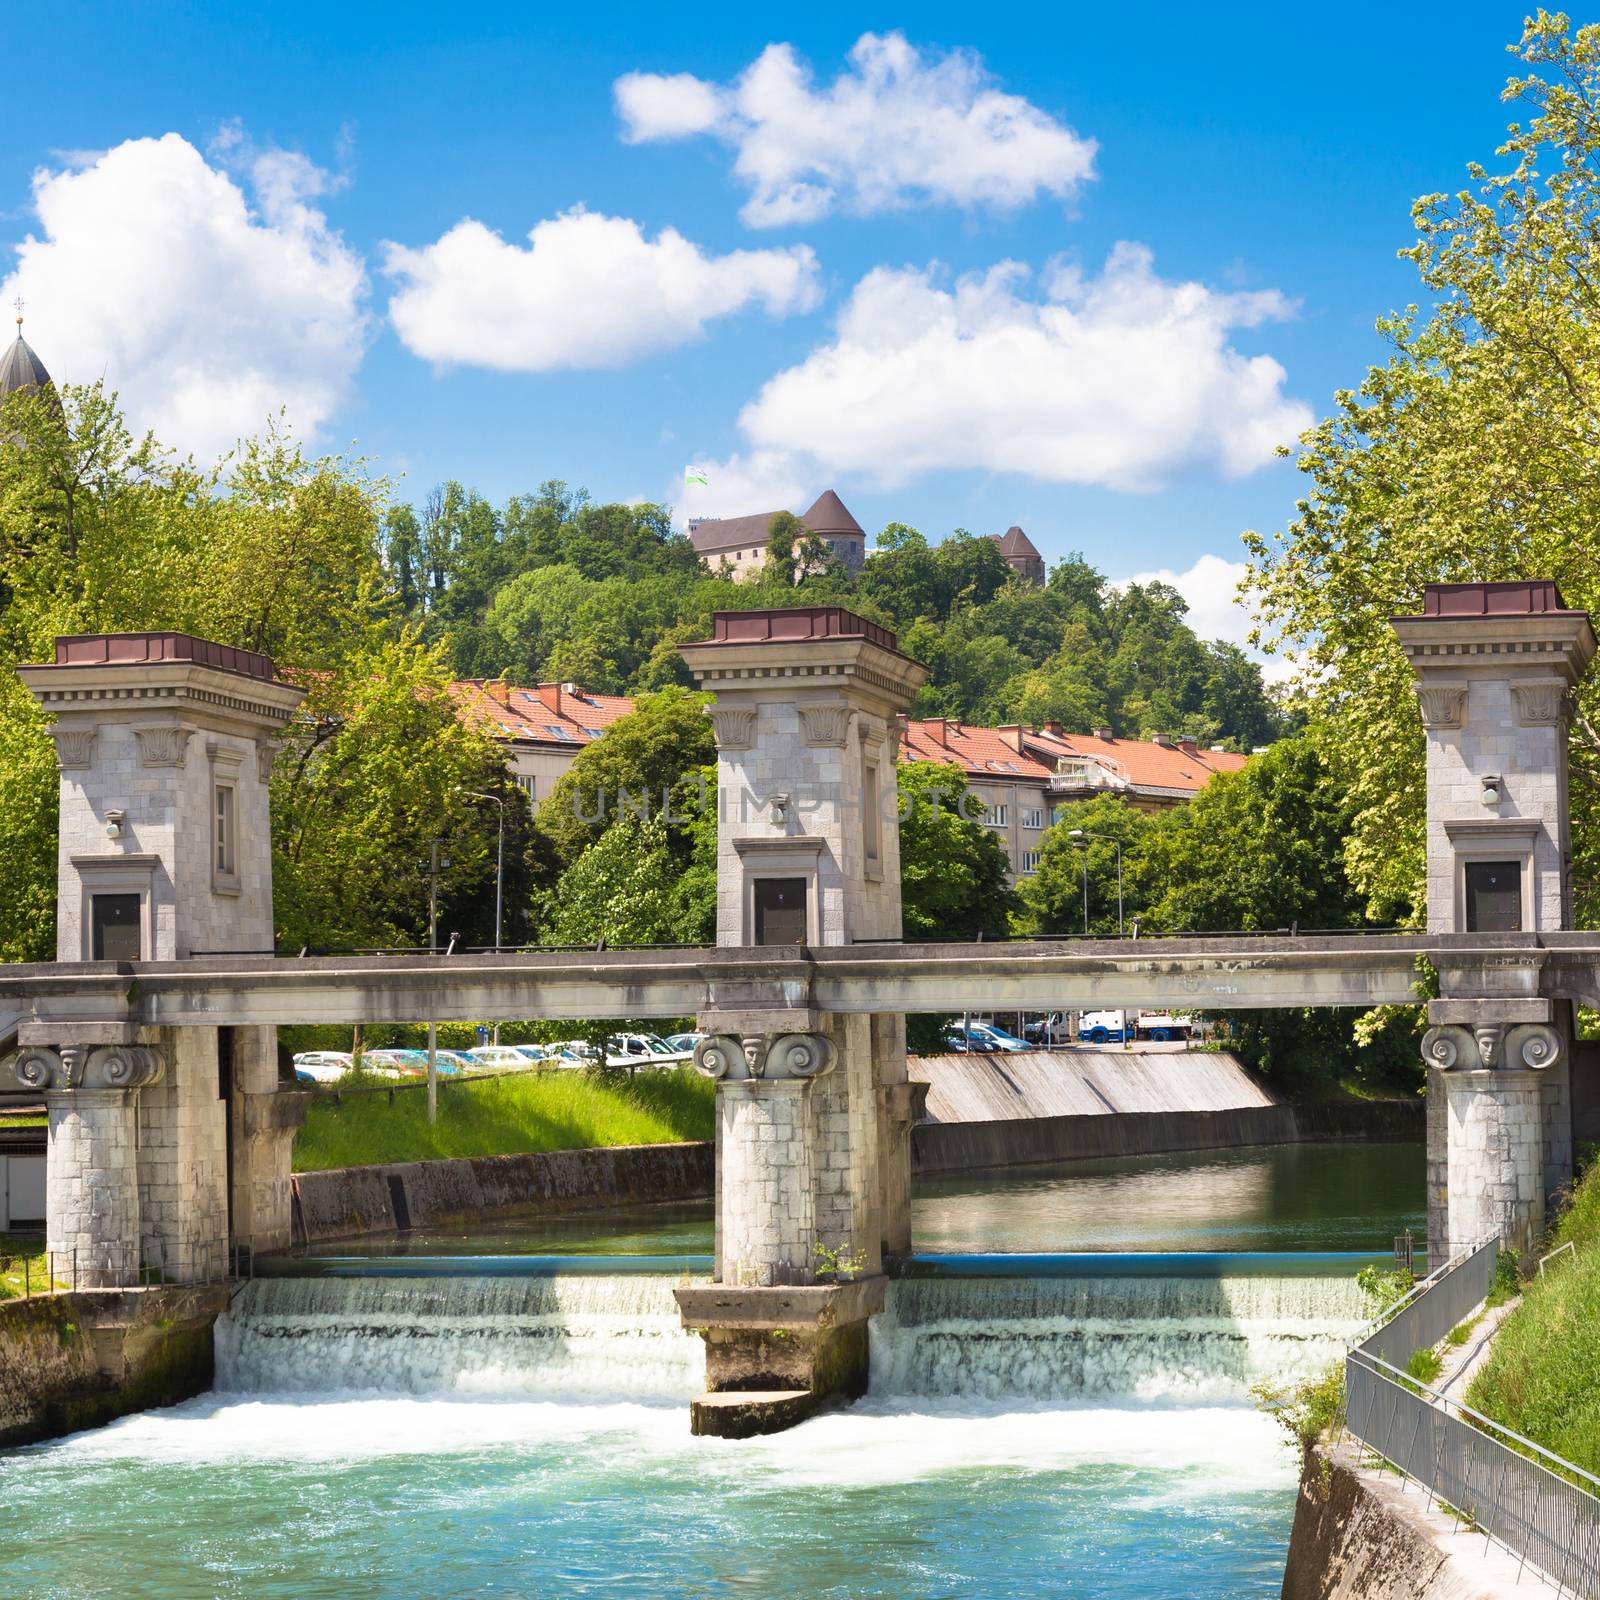 Sluice on the River Ljubljanica, Ljubljana, Slovenia was designed by famous architect Joze Plecnik.